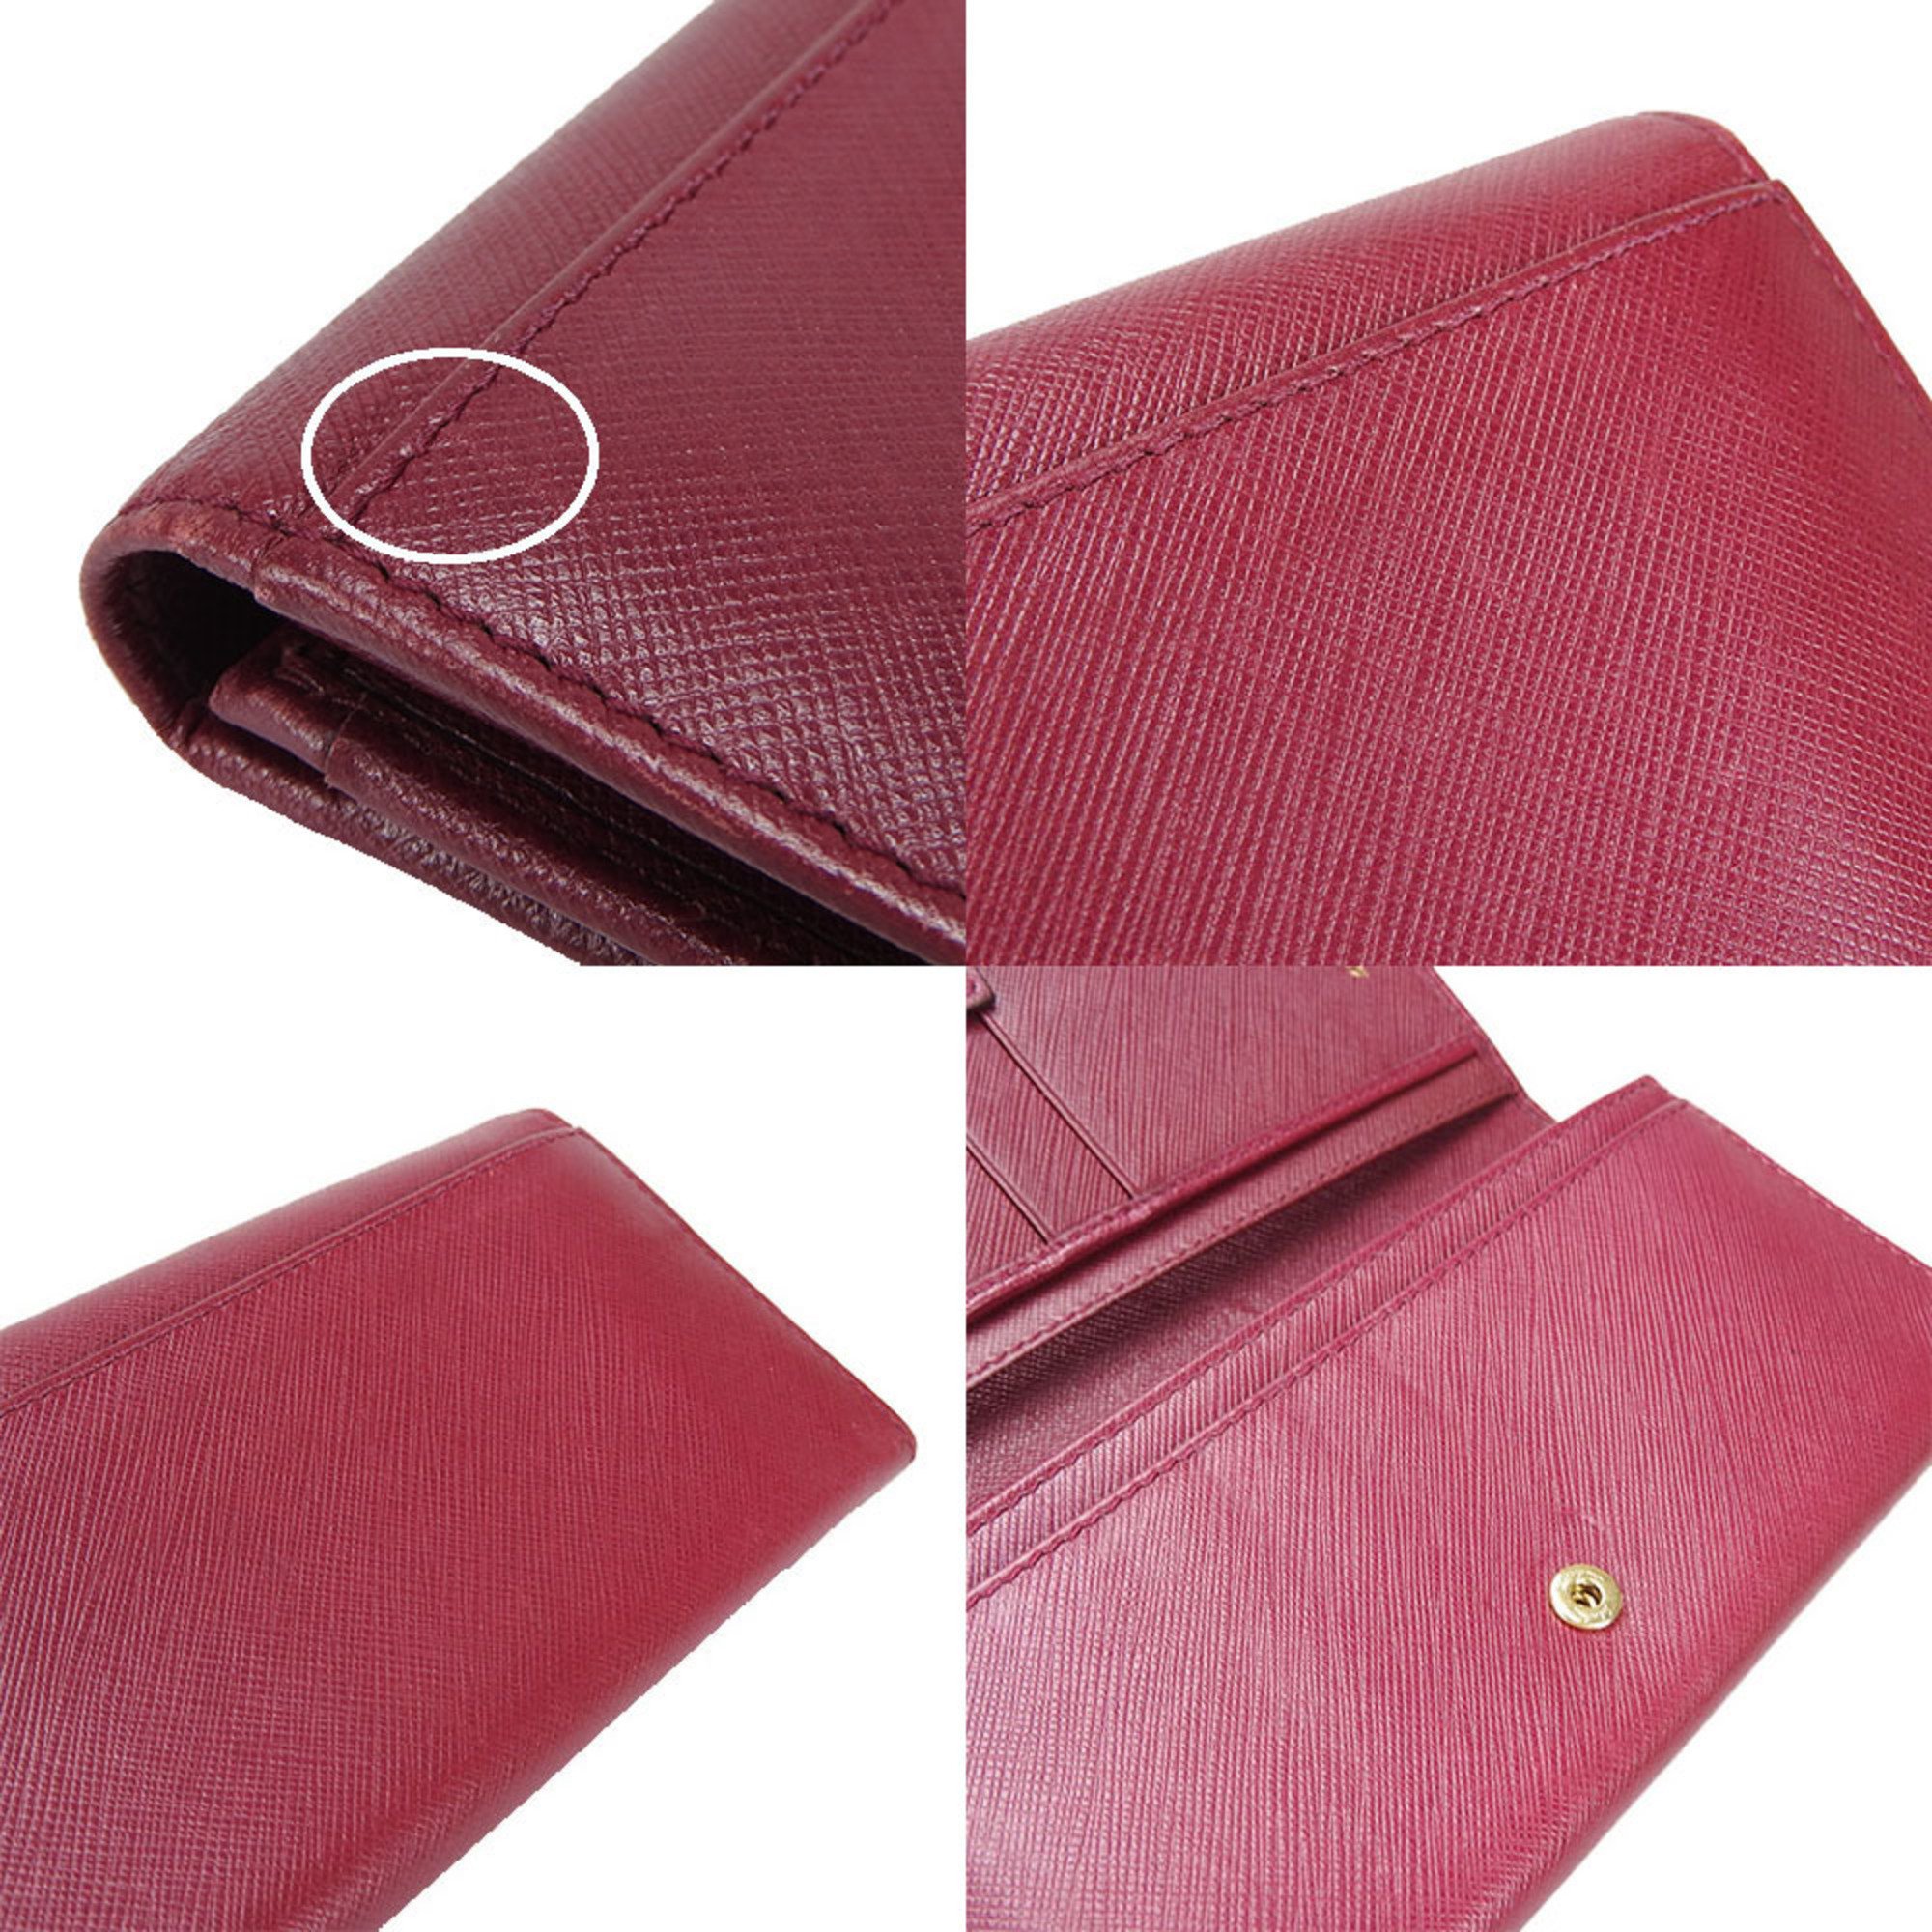 Salvatore Ferragamo Bi-fold long wallet KI-22B857 Purple leather